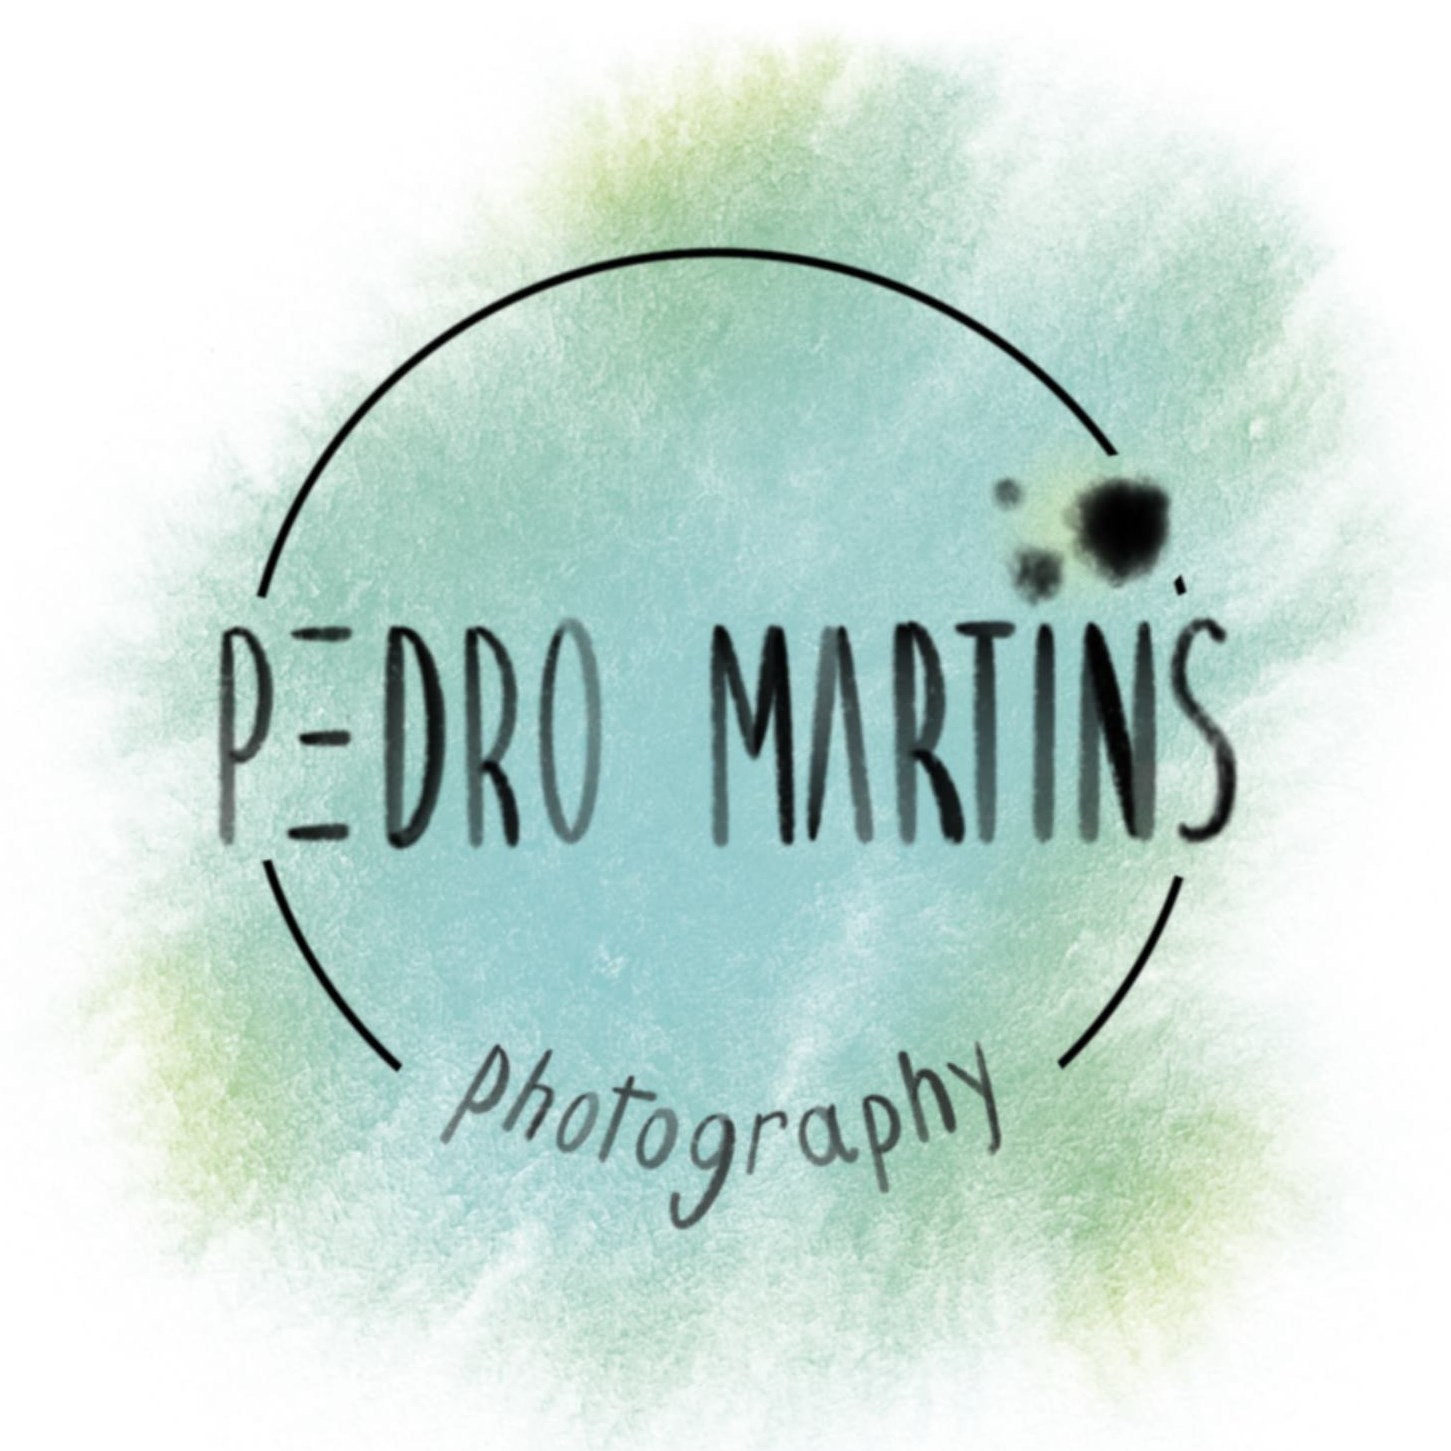 Pedro Martins Photography